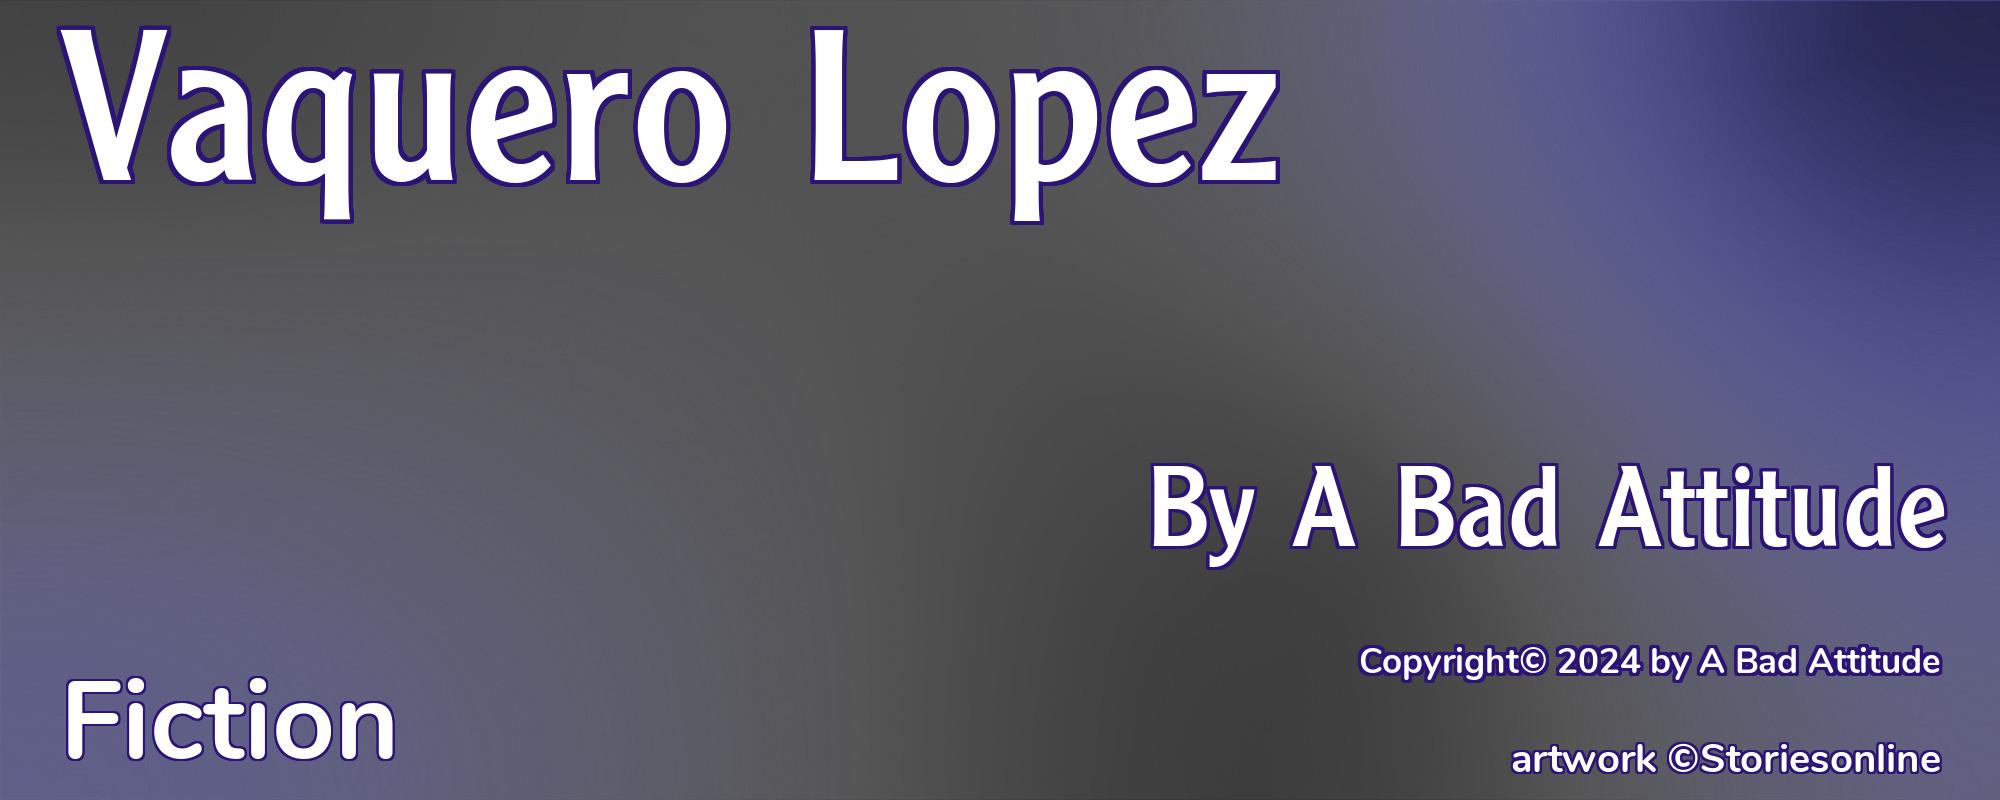 Vaquero Lopez - Cover